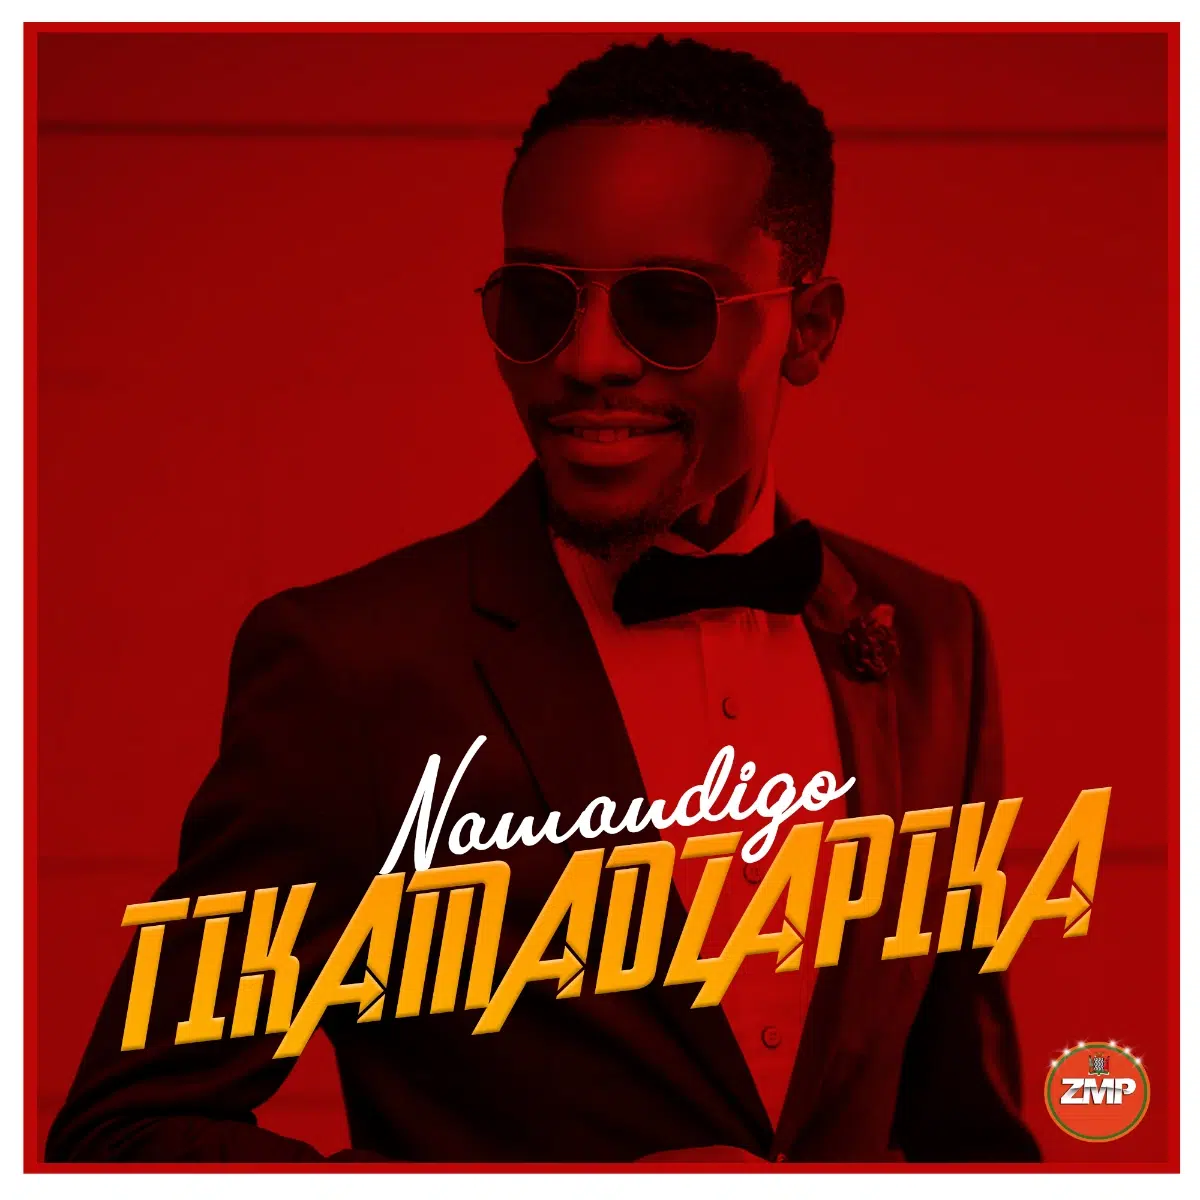 DOWNLOAD: Namadingo – “Tikamadzapita” Mp3